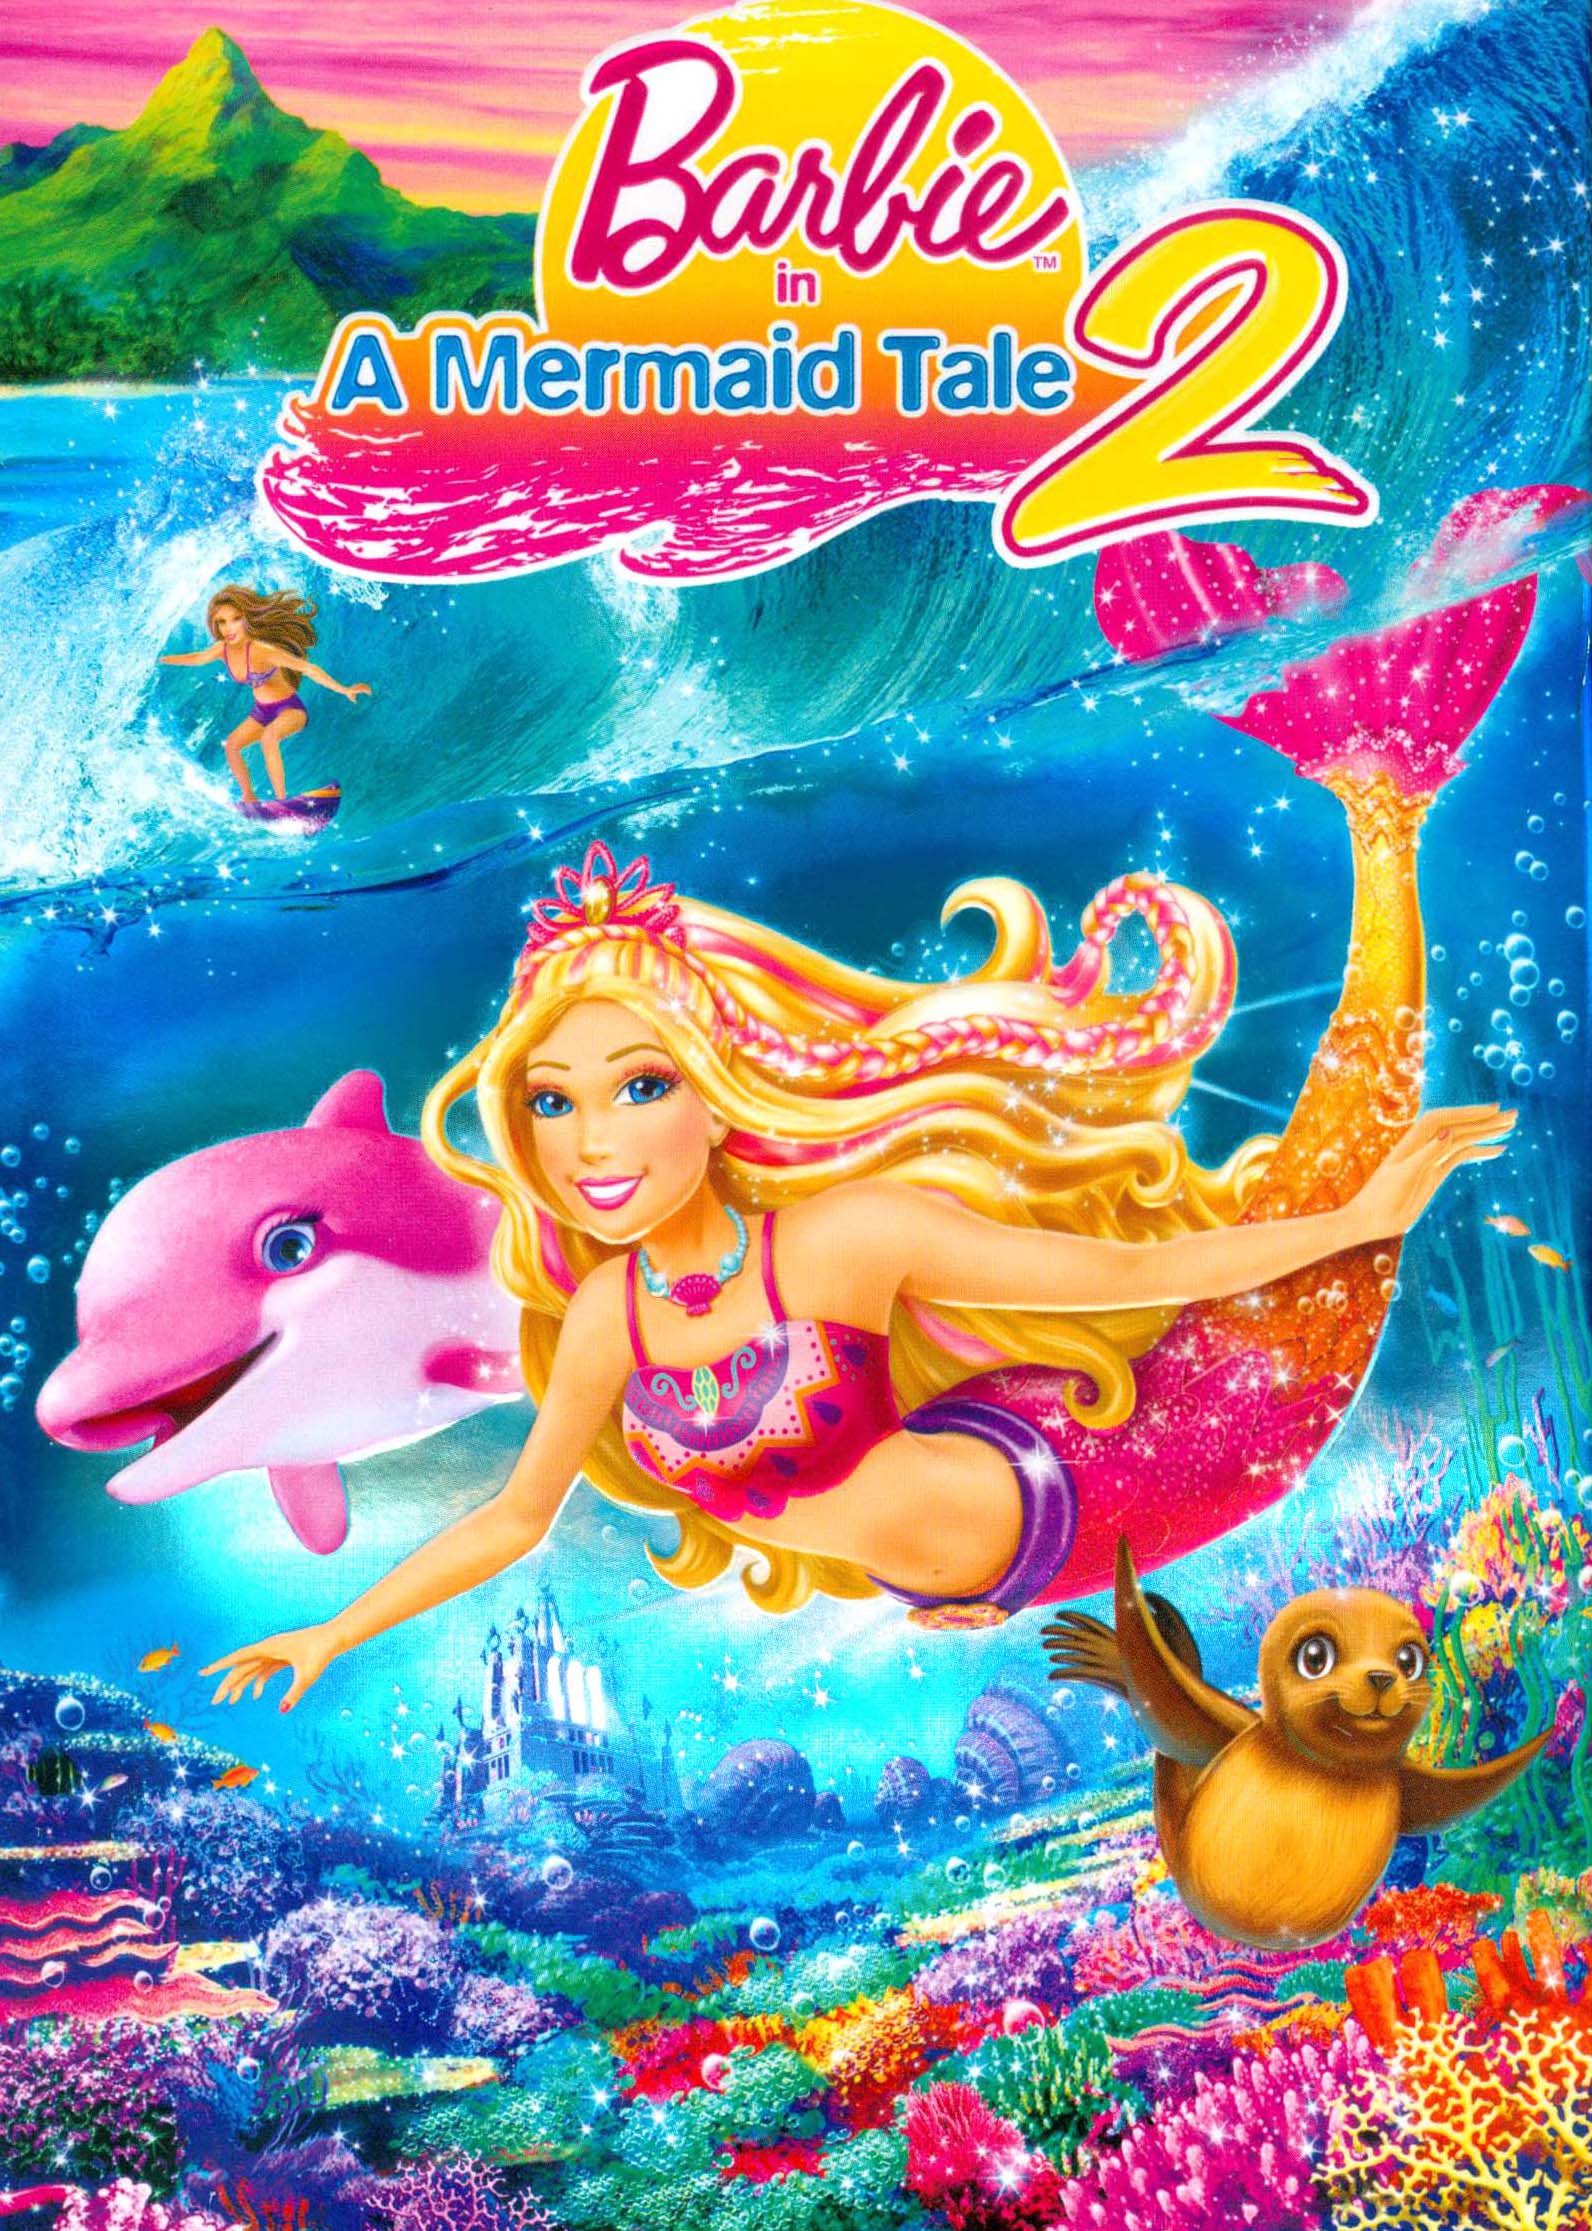 Buy Barbie in a Mermaid Tale/Barbie in a Mermaid Tale DVD Double